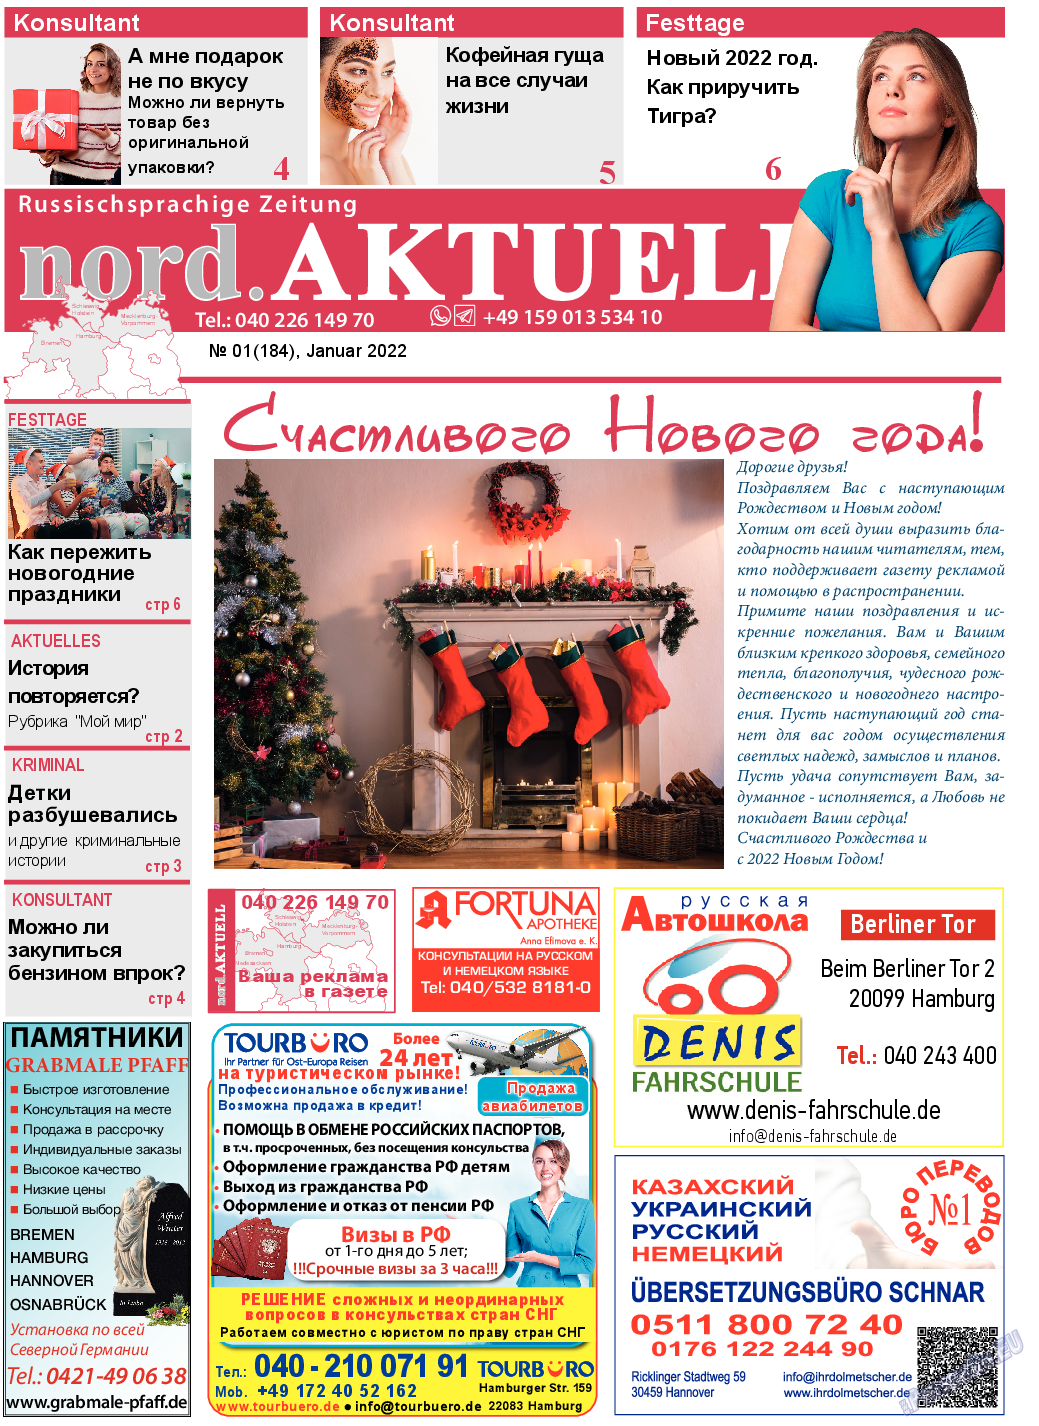 nord.Aktuell, газета. 2022 №1 стр.1